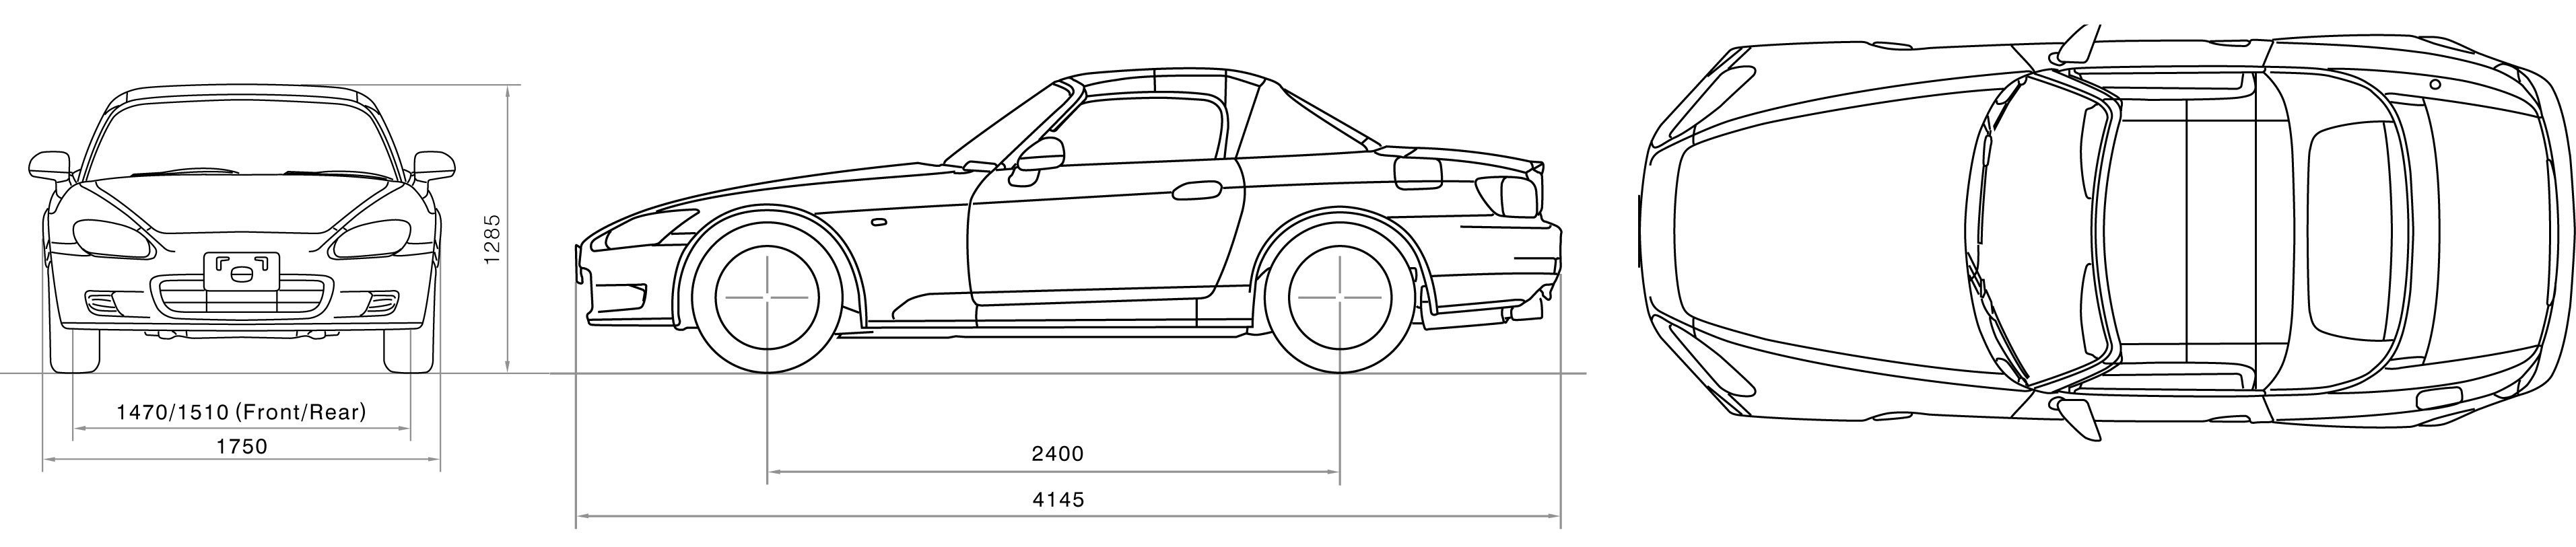 2005 Honda S2000 Coupe Blueprints Free Outlines